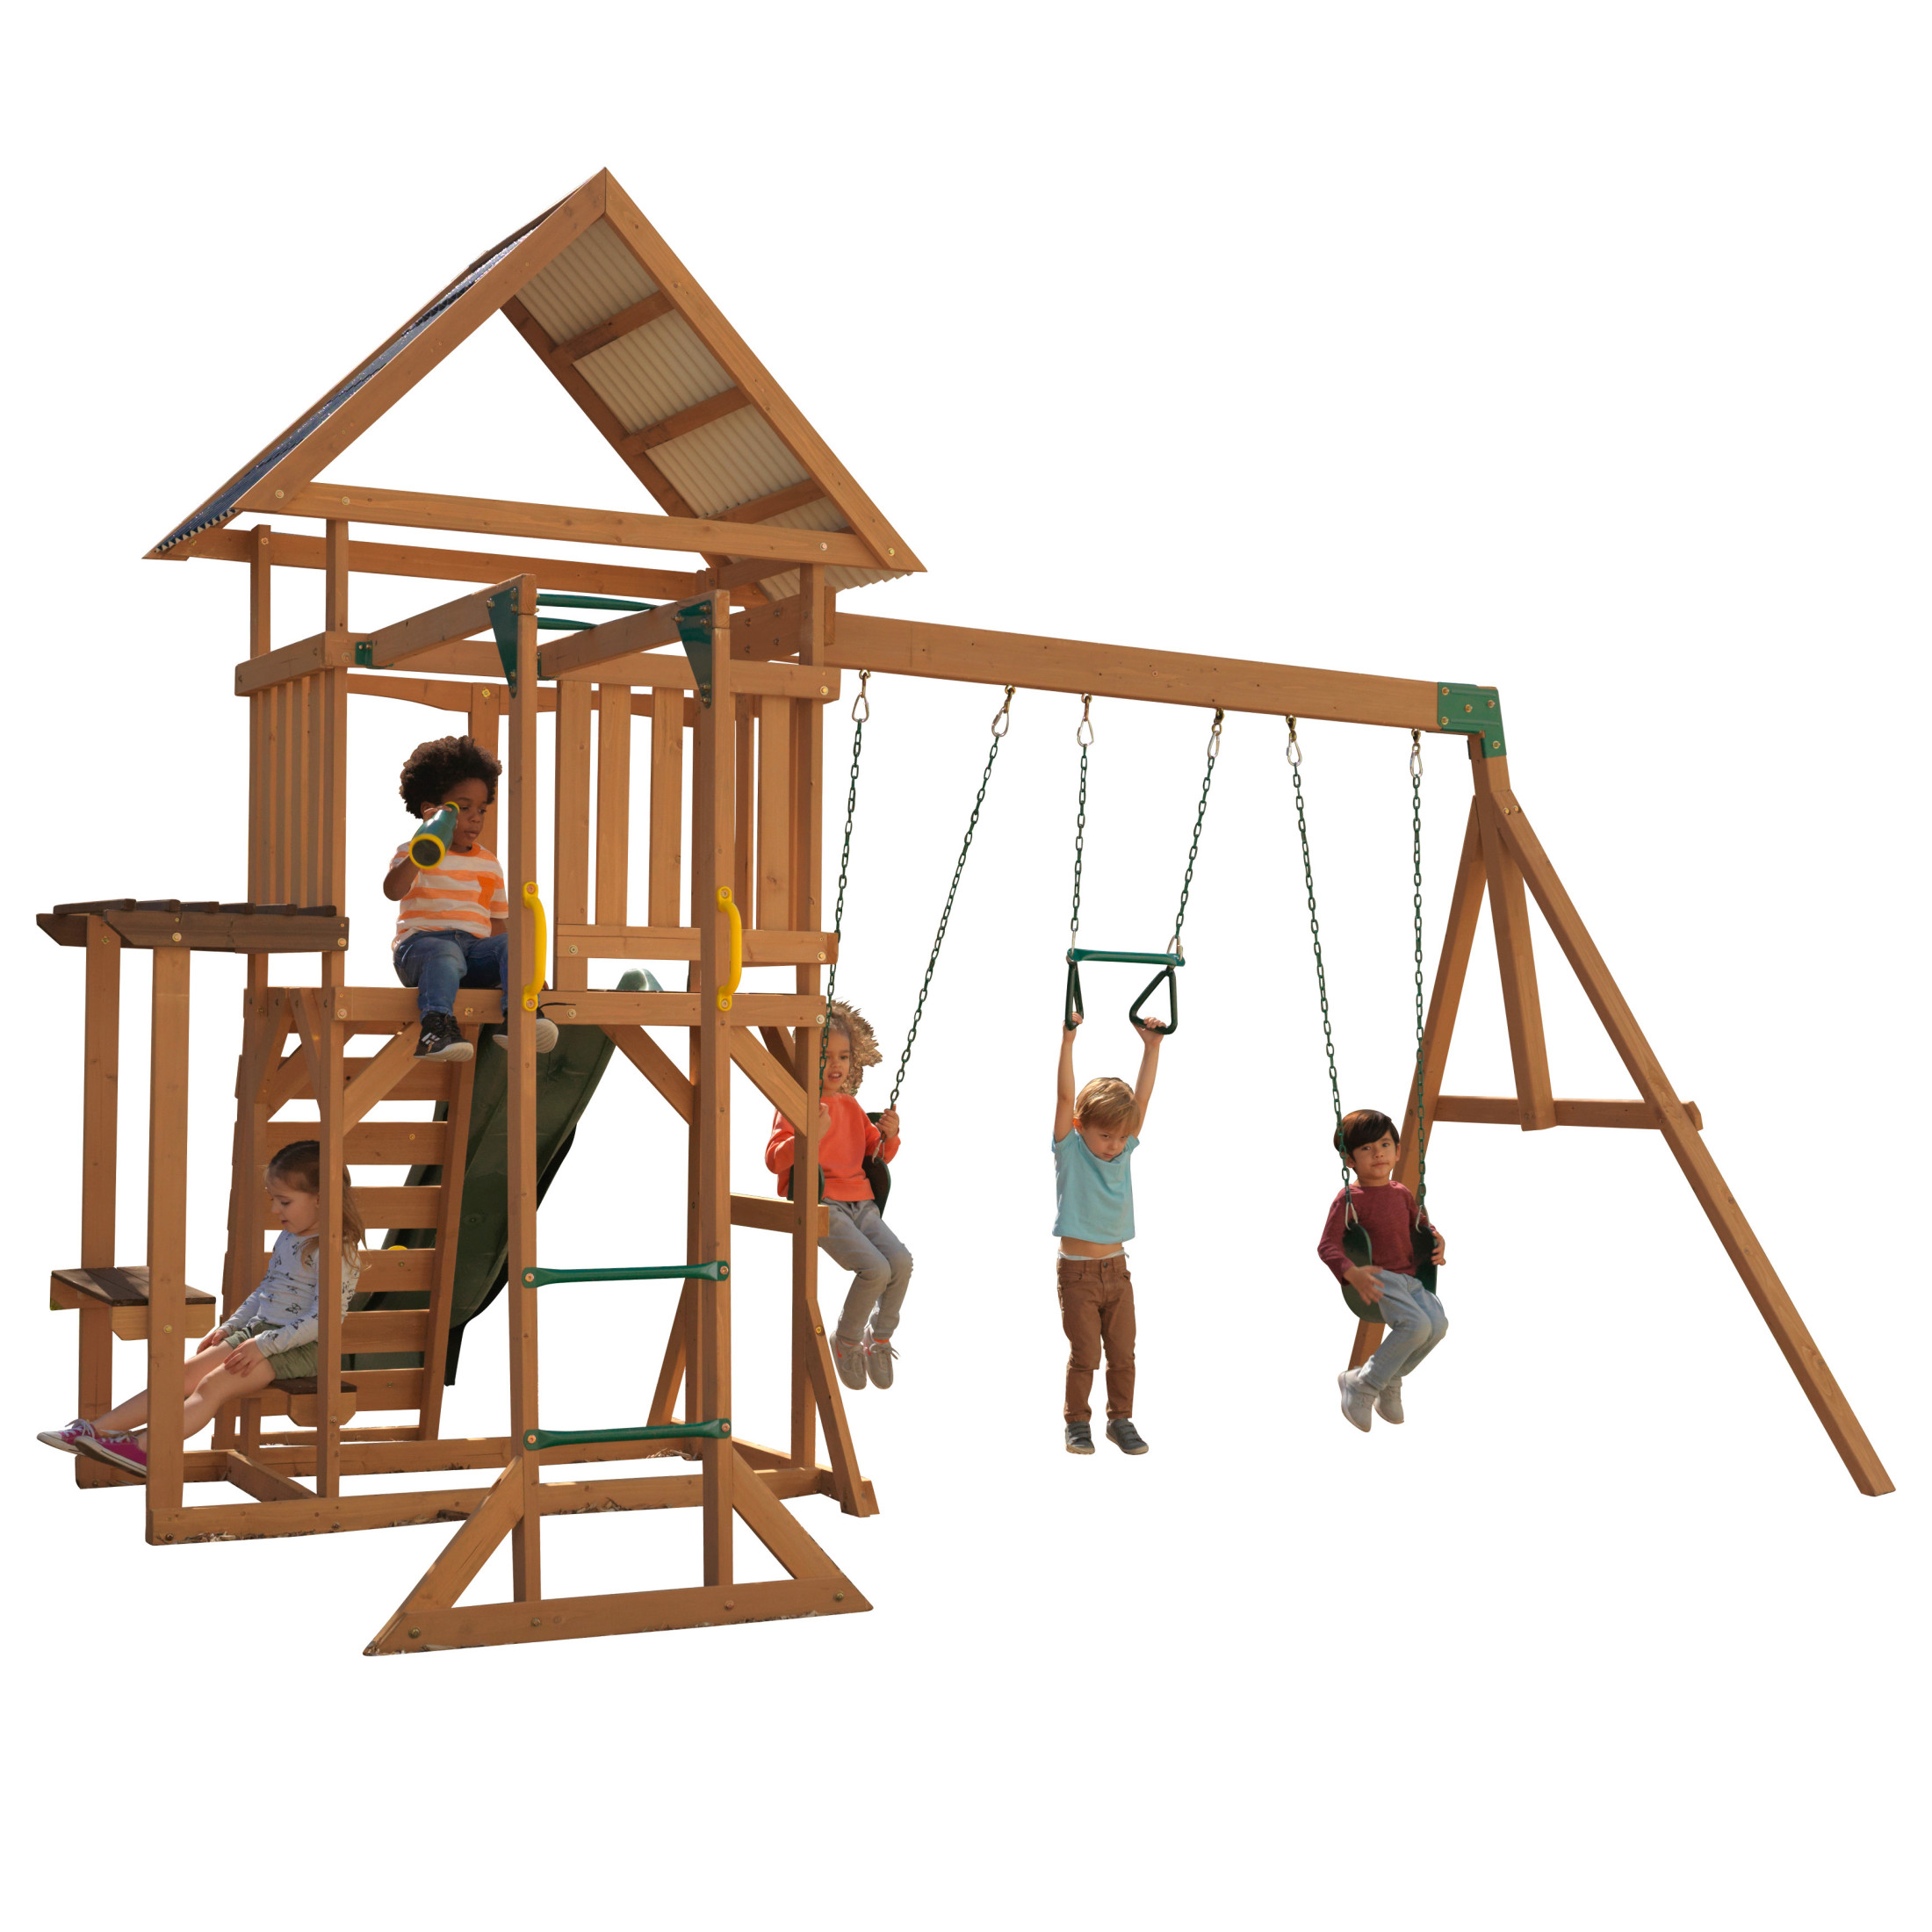 KidKraft Lawnmeadow Wooden Outdoor Swing Set with Slide and Monkey Bars - image 4 of 20